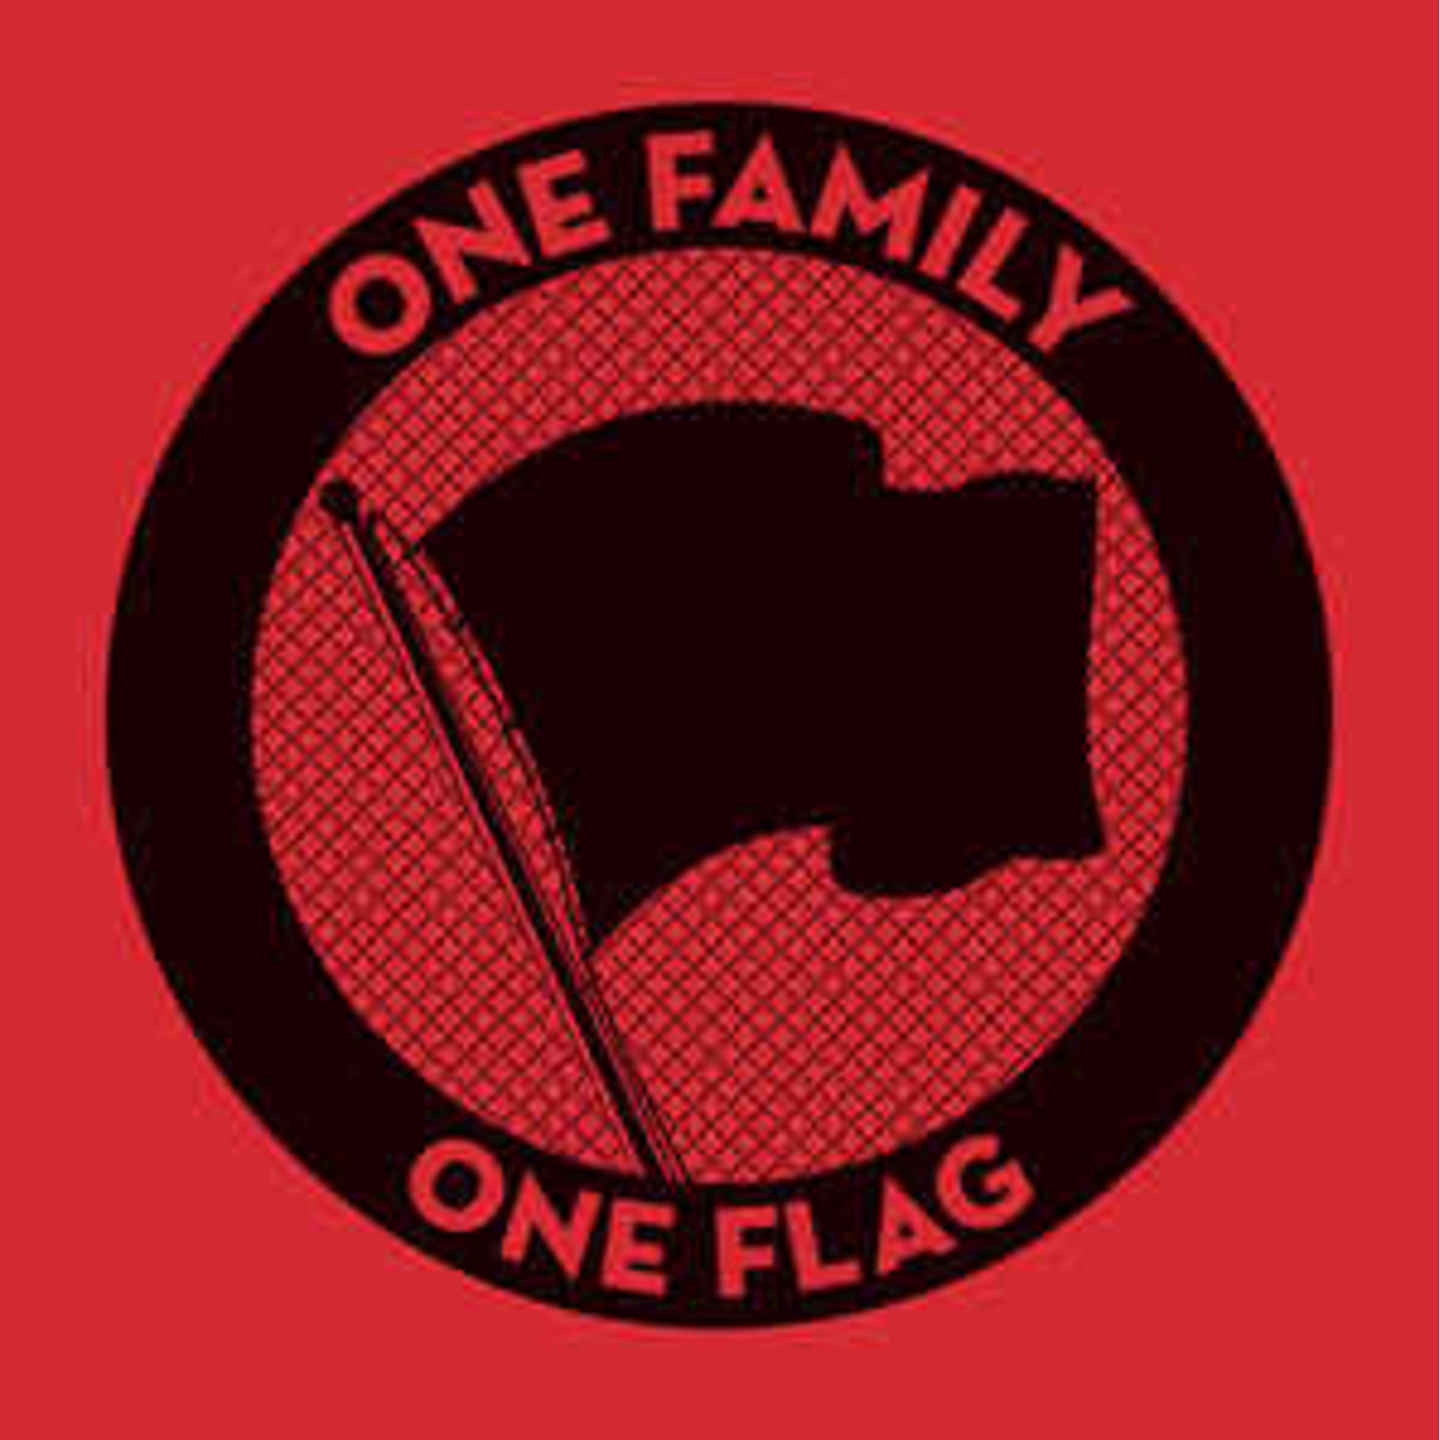 VA - One Family One Flag 3xLP